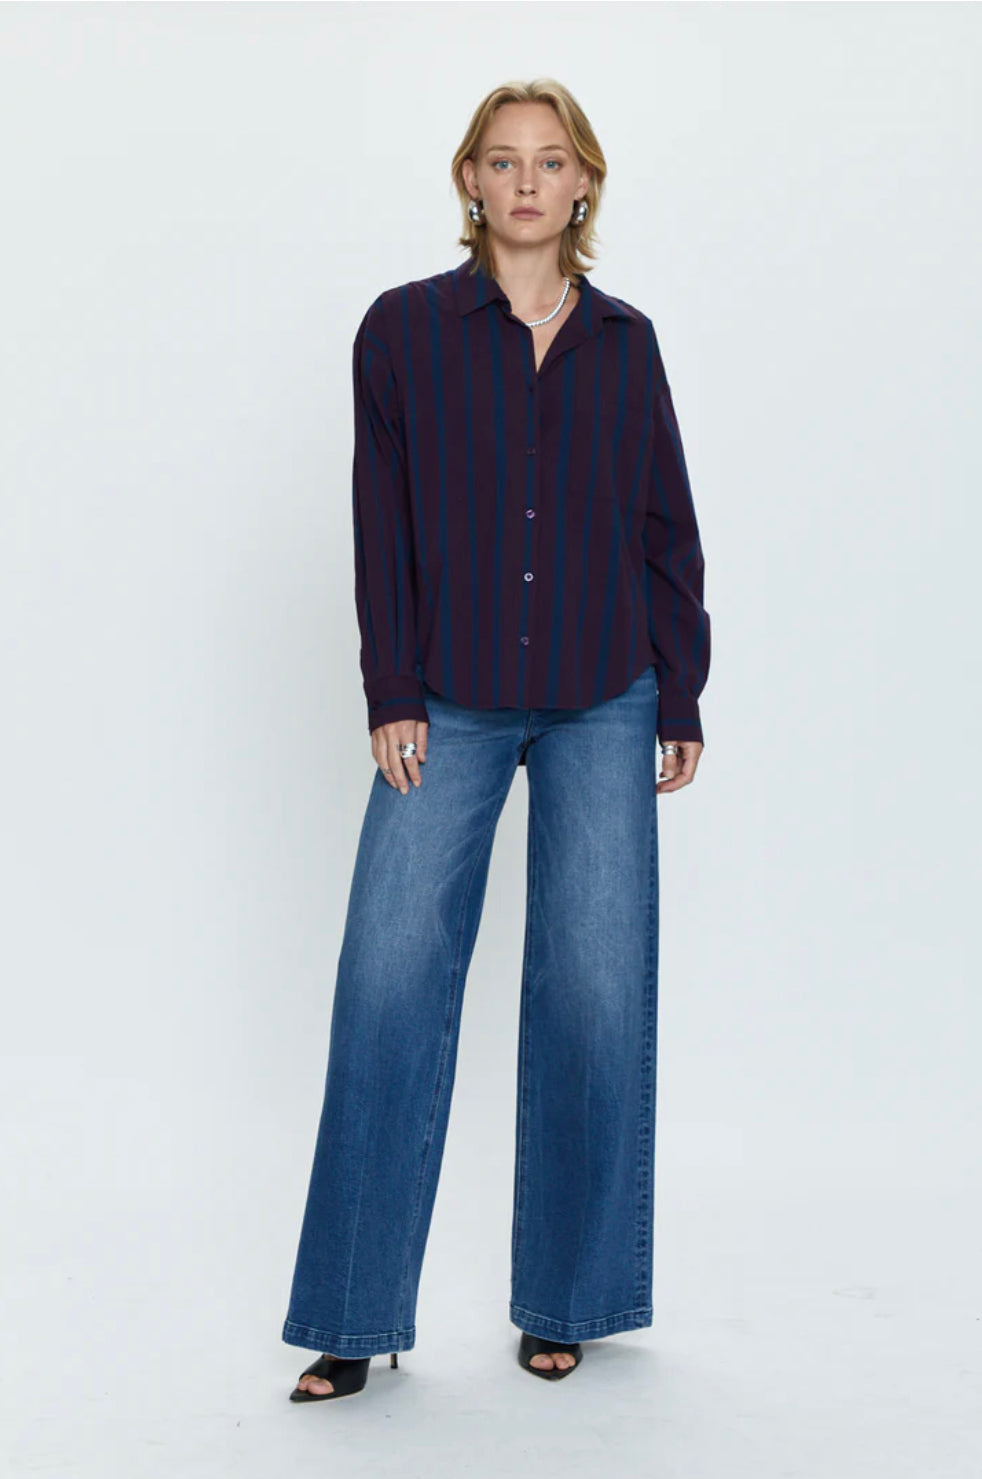 Sloane Oversized Button Down Shirt - PISTOLA